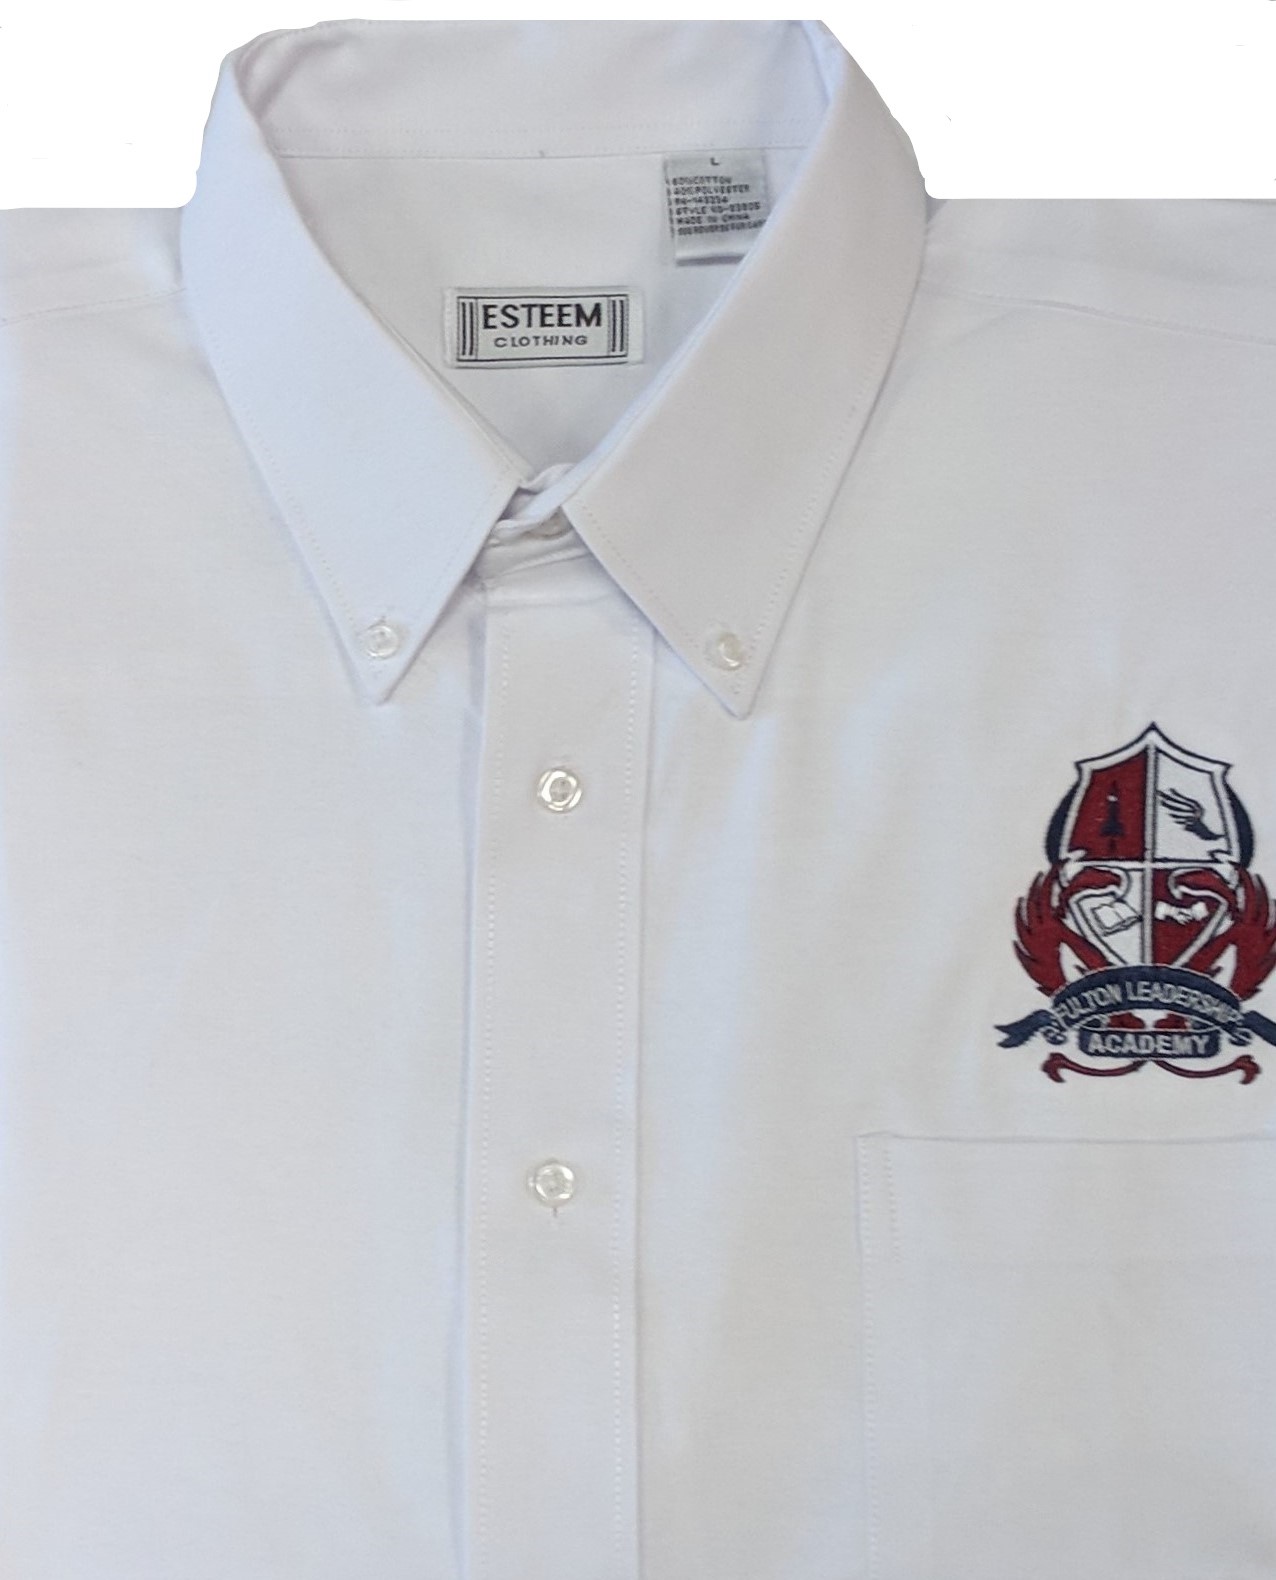 FLA-Adult short sleeve oxford shirt with logo(High school)